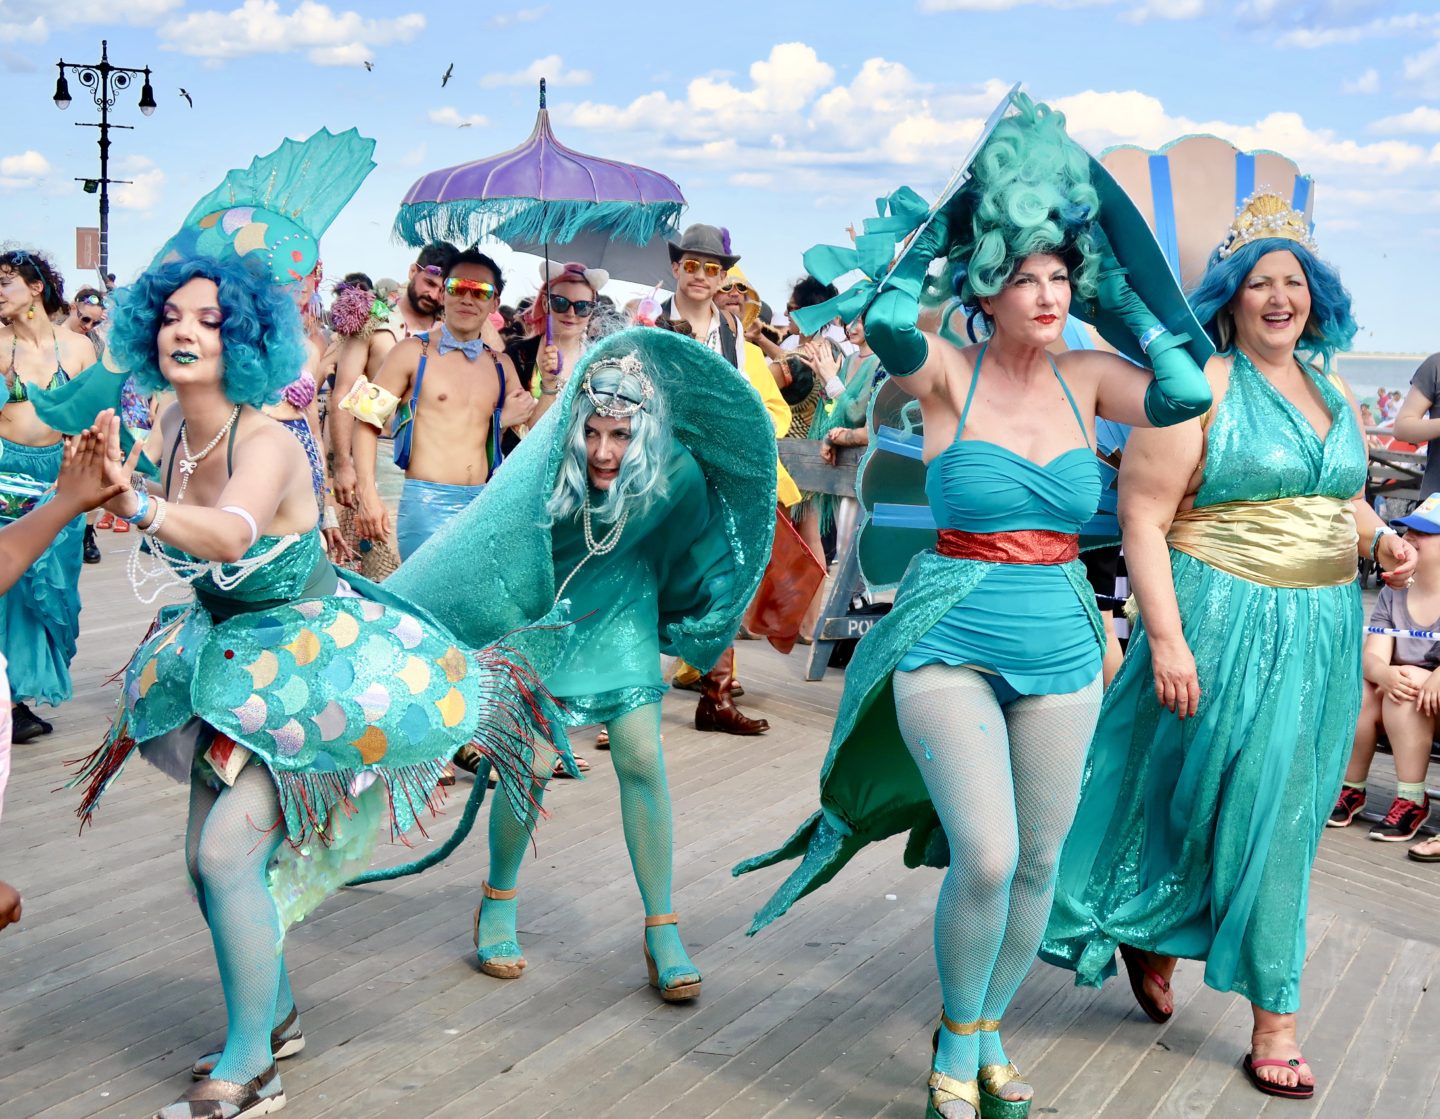 A Look Inside The Coney Island Mermaid Parade